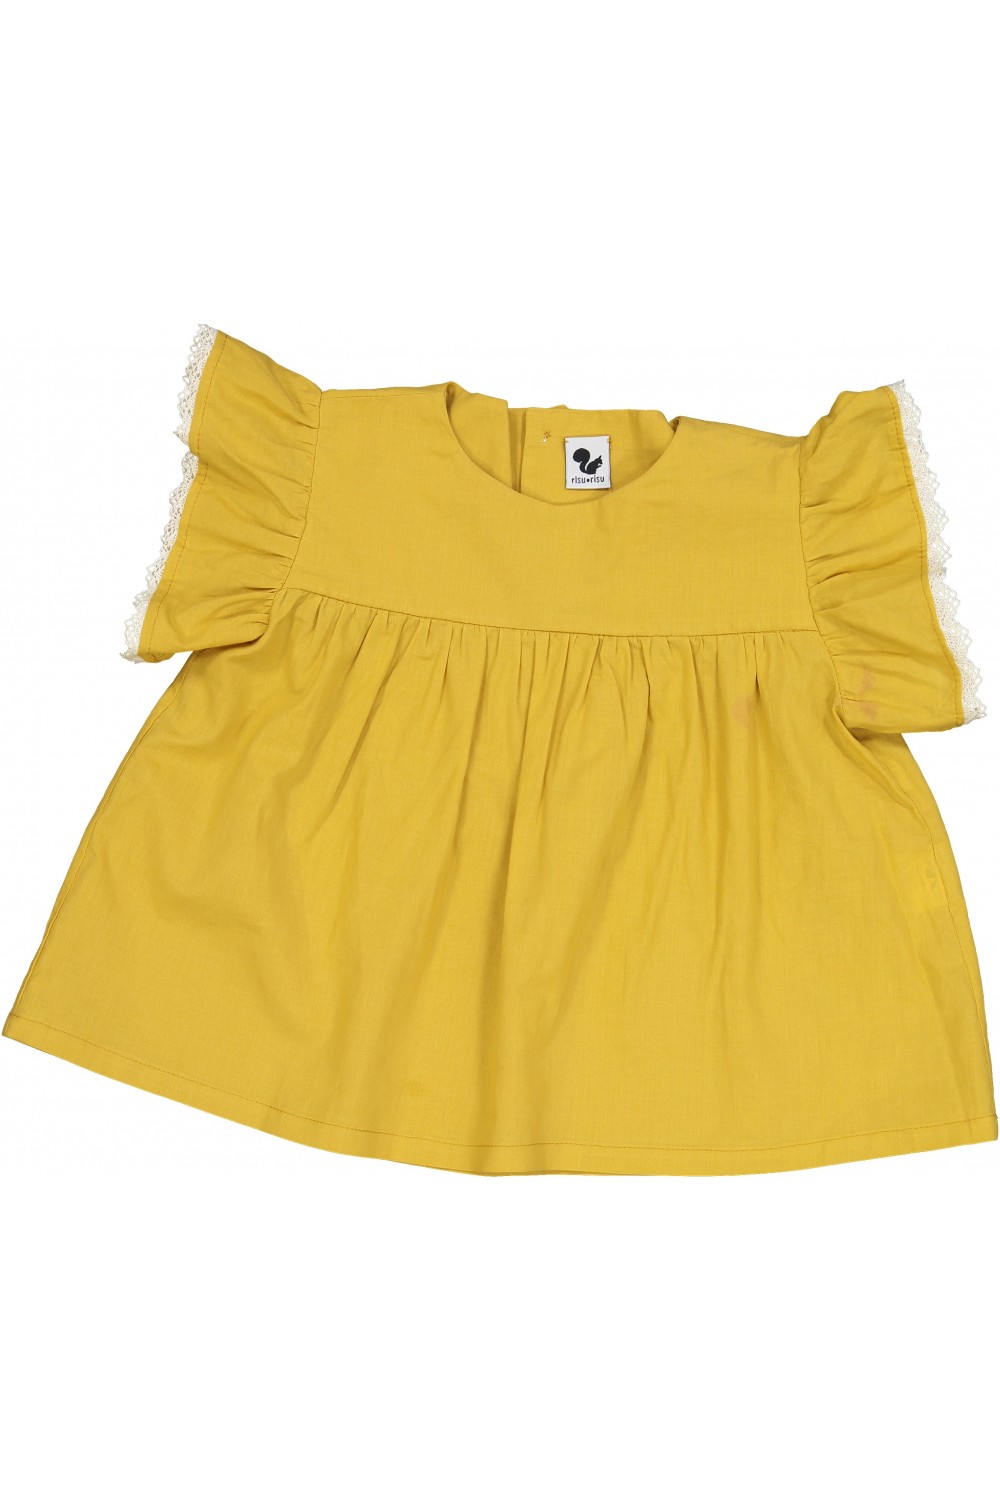 organic cotton summer girl's blouse yellow